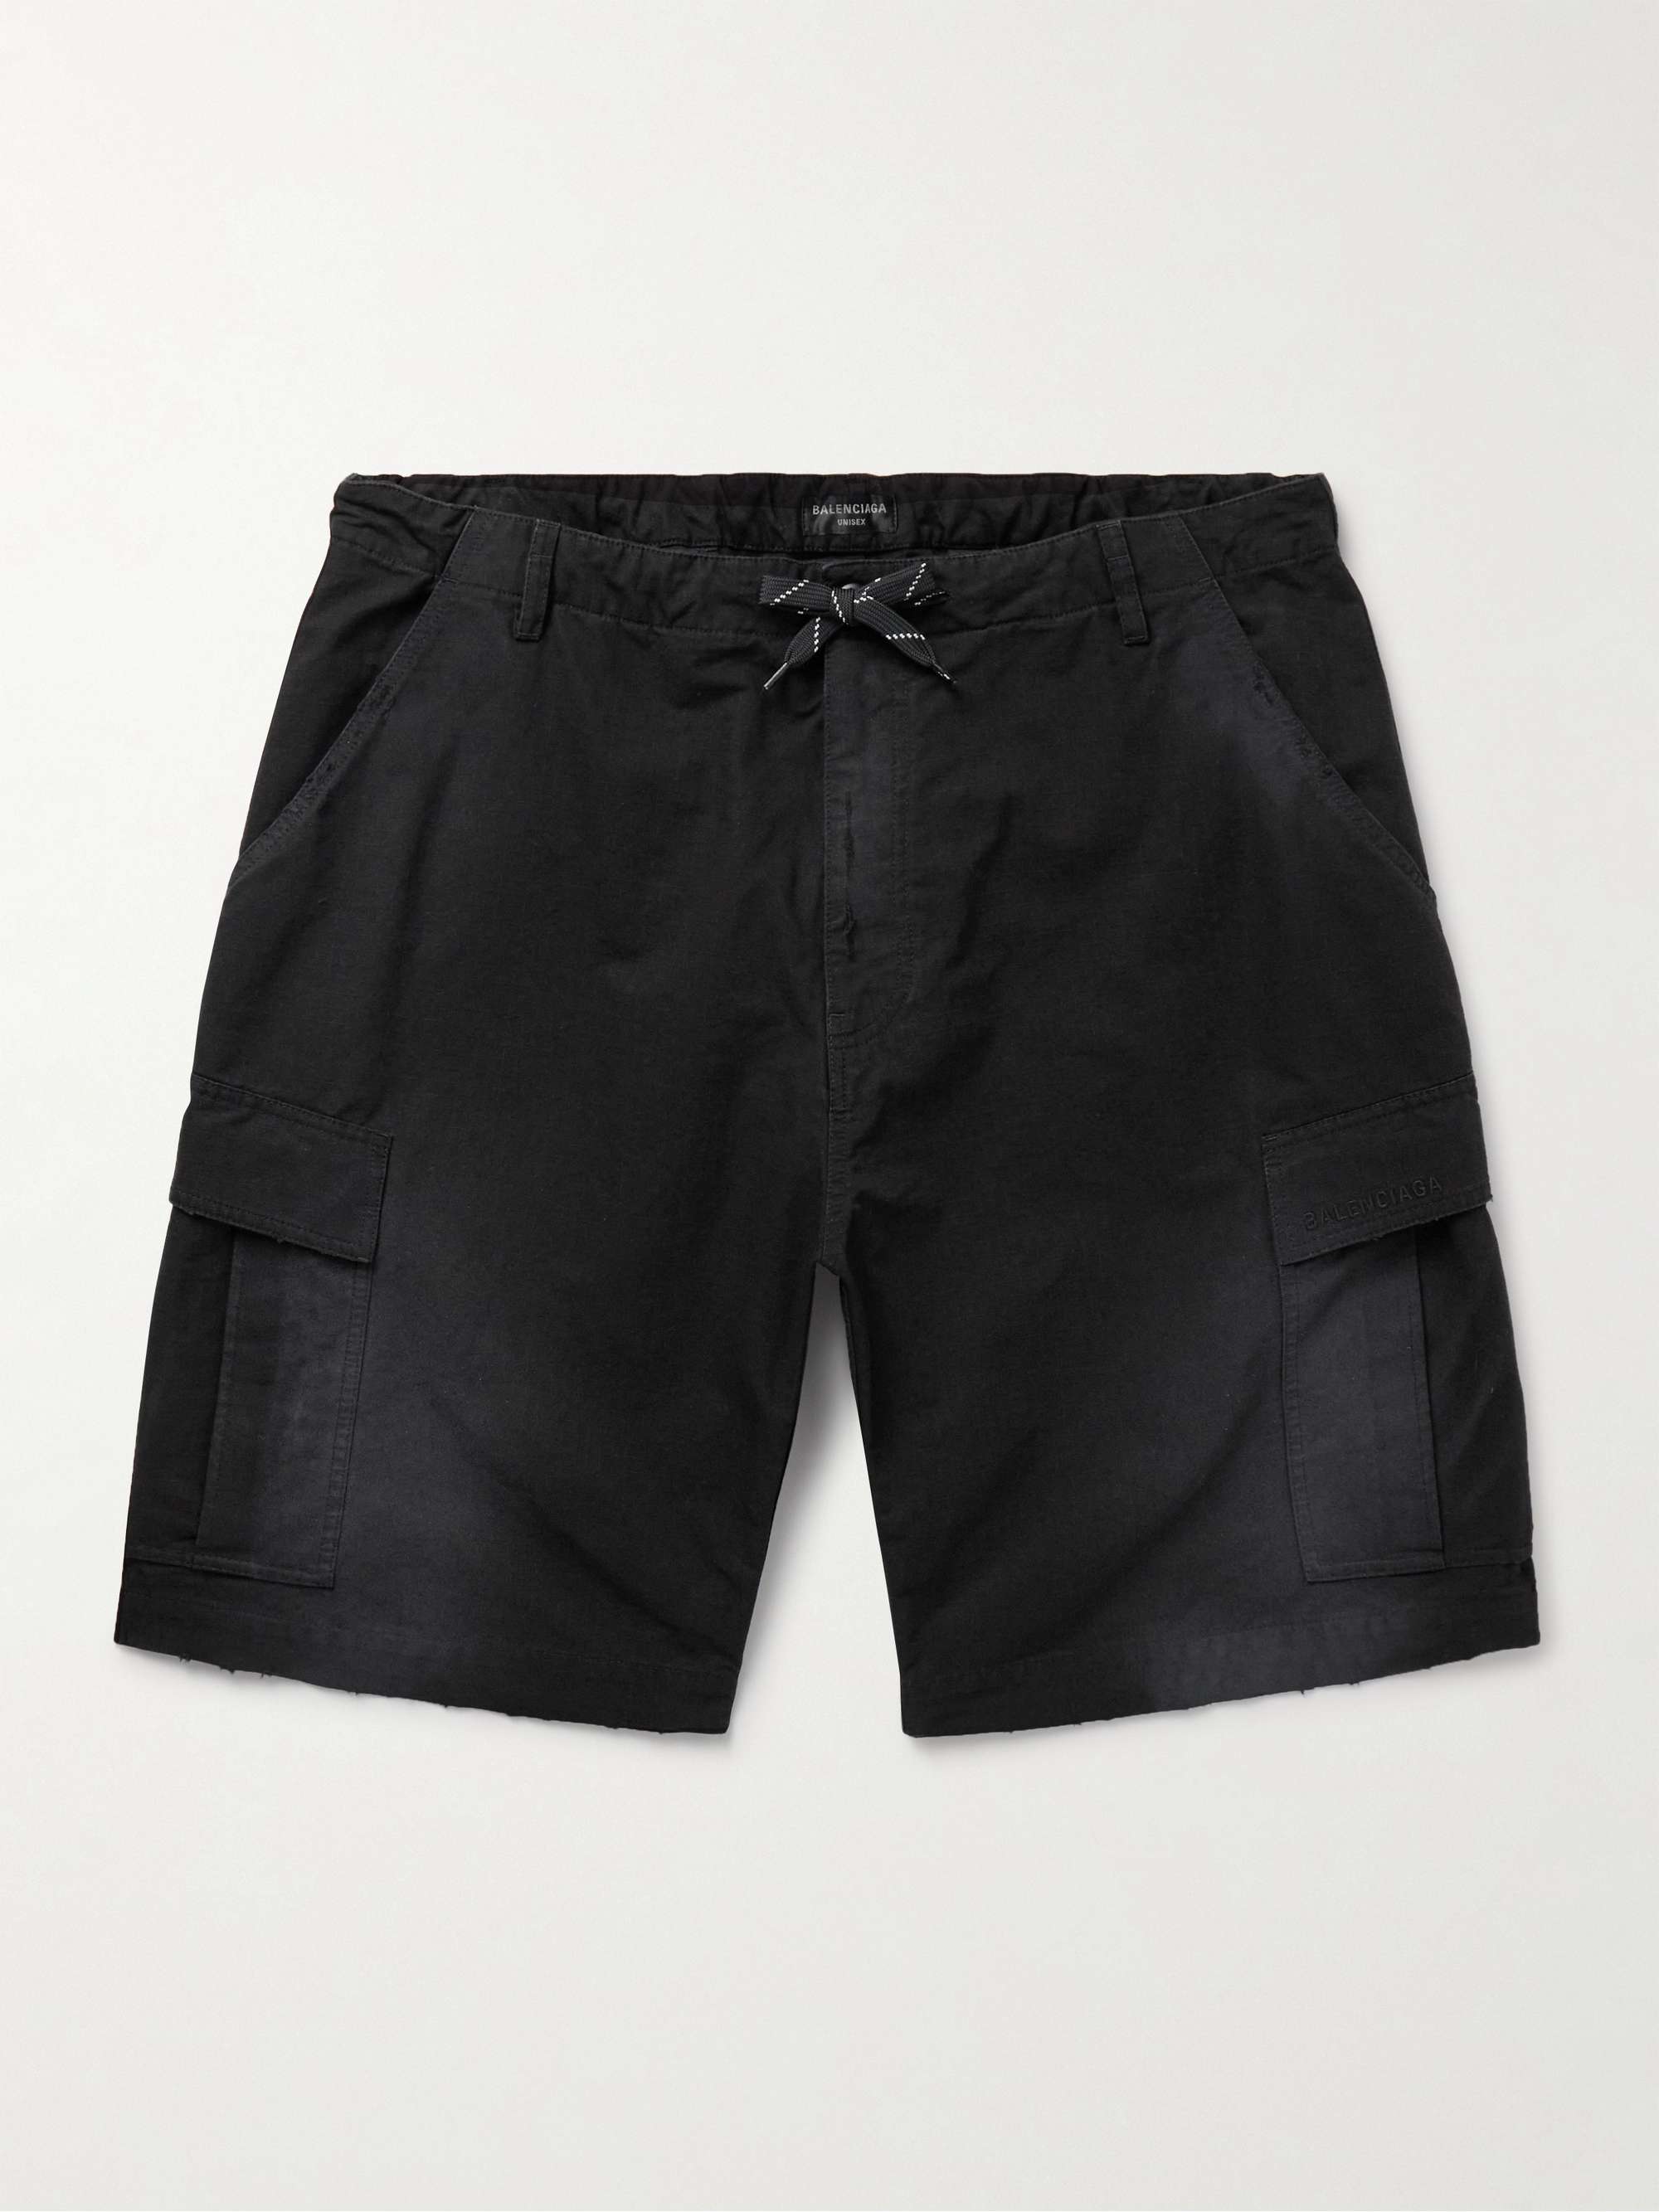 Balenciaga Wide-Leg Distressed Cotton-Ripstop Drawstring Cargo Shorts - Men - Black Shorts - L